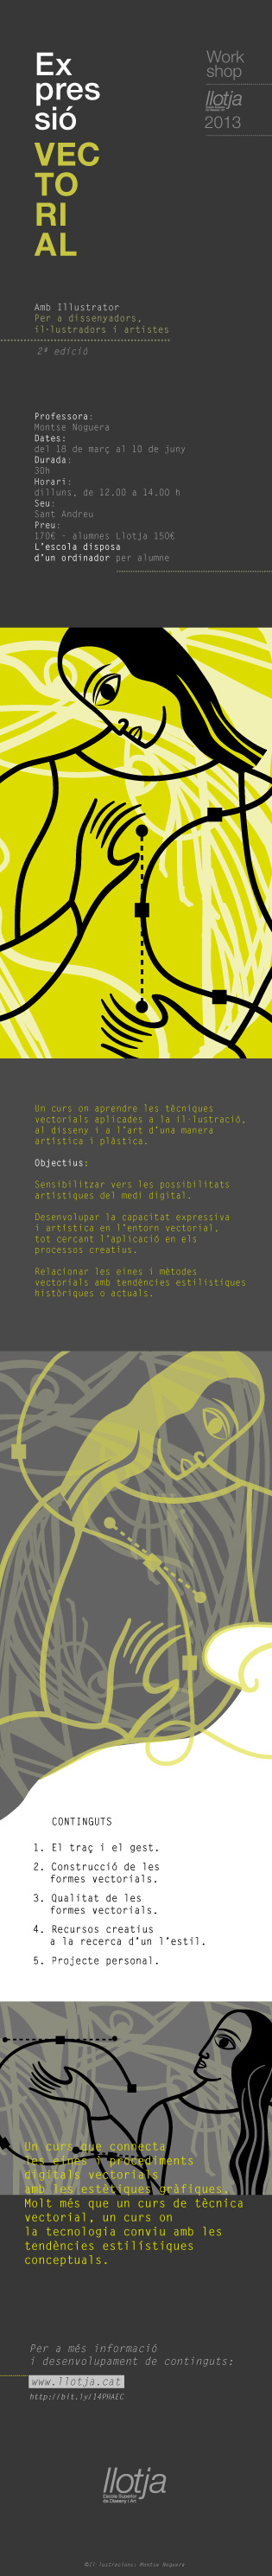 Workshop vectorial Disseny de  Montse Noguera